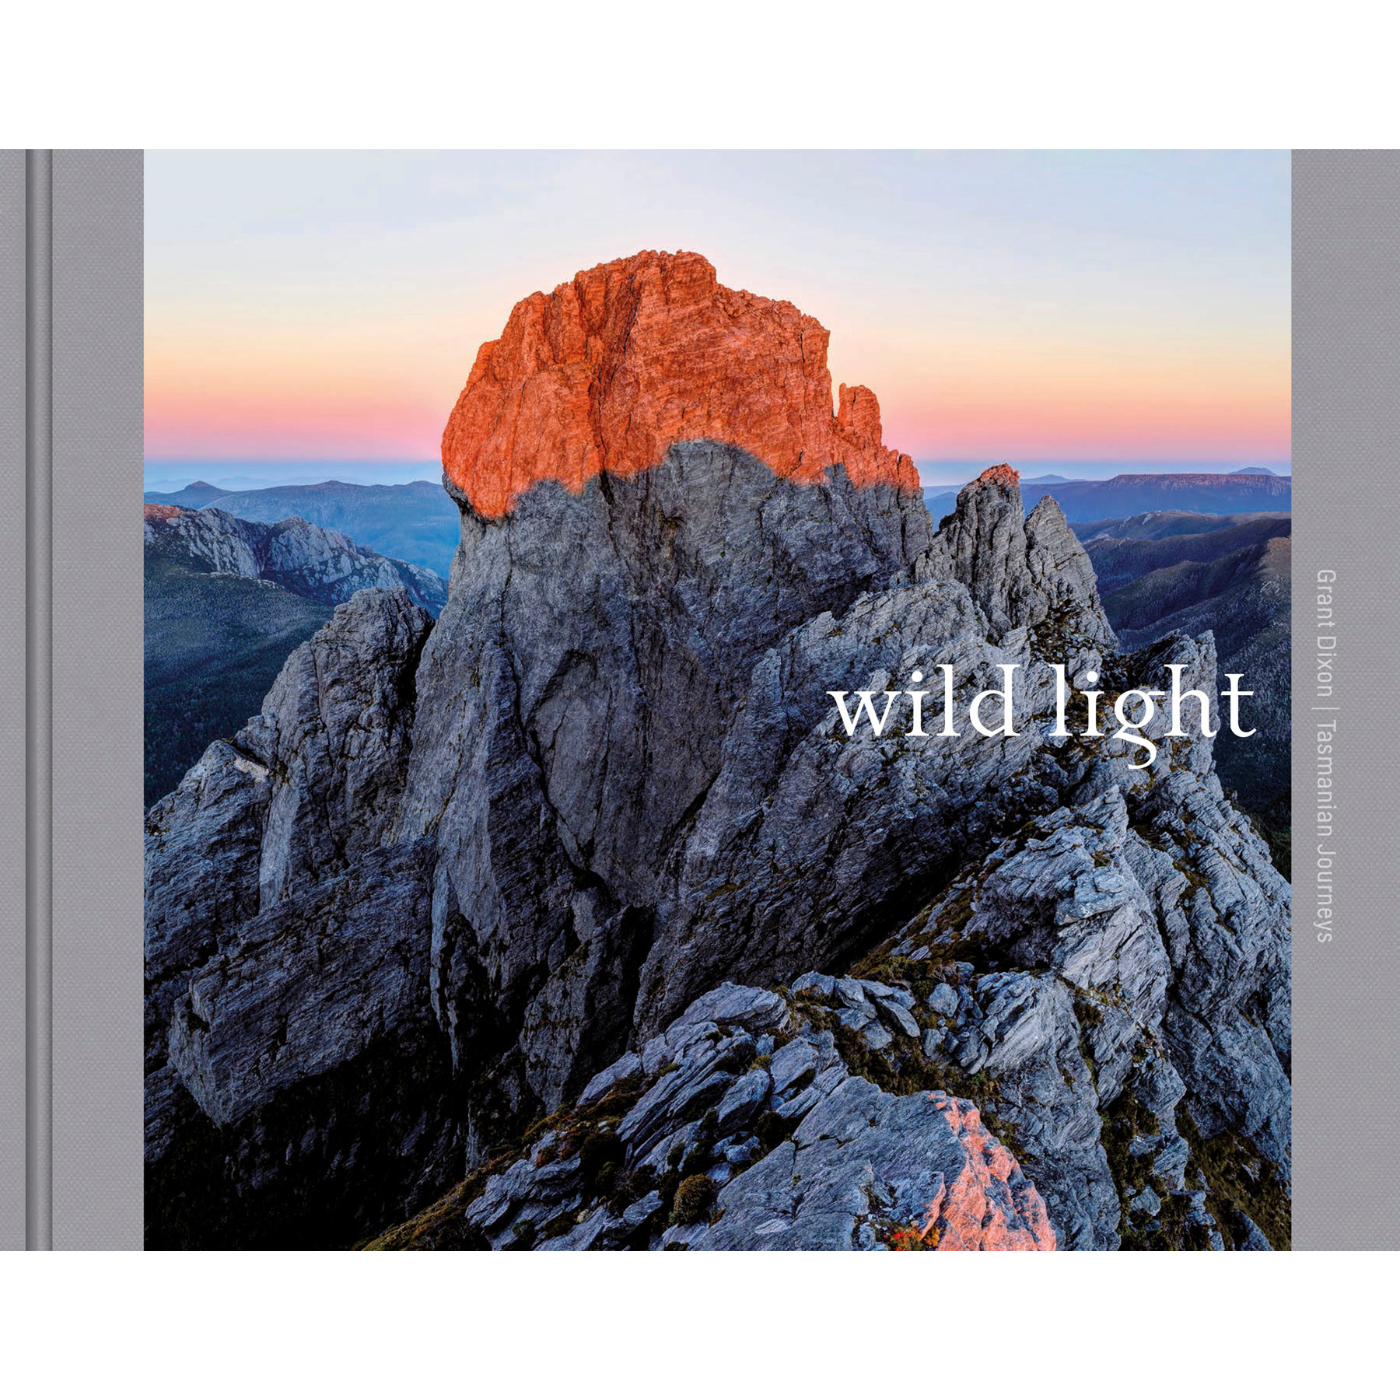 Wild Light by Grant Dixon